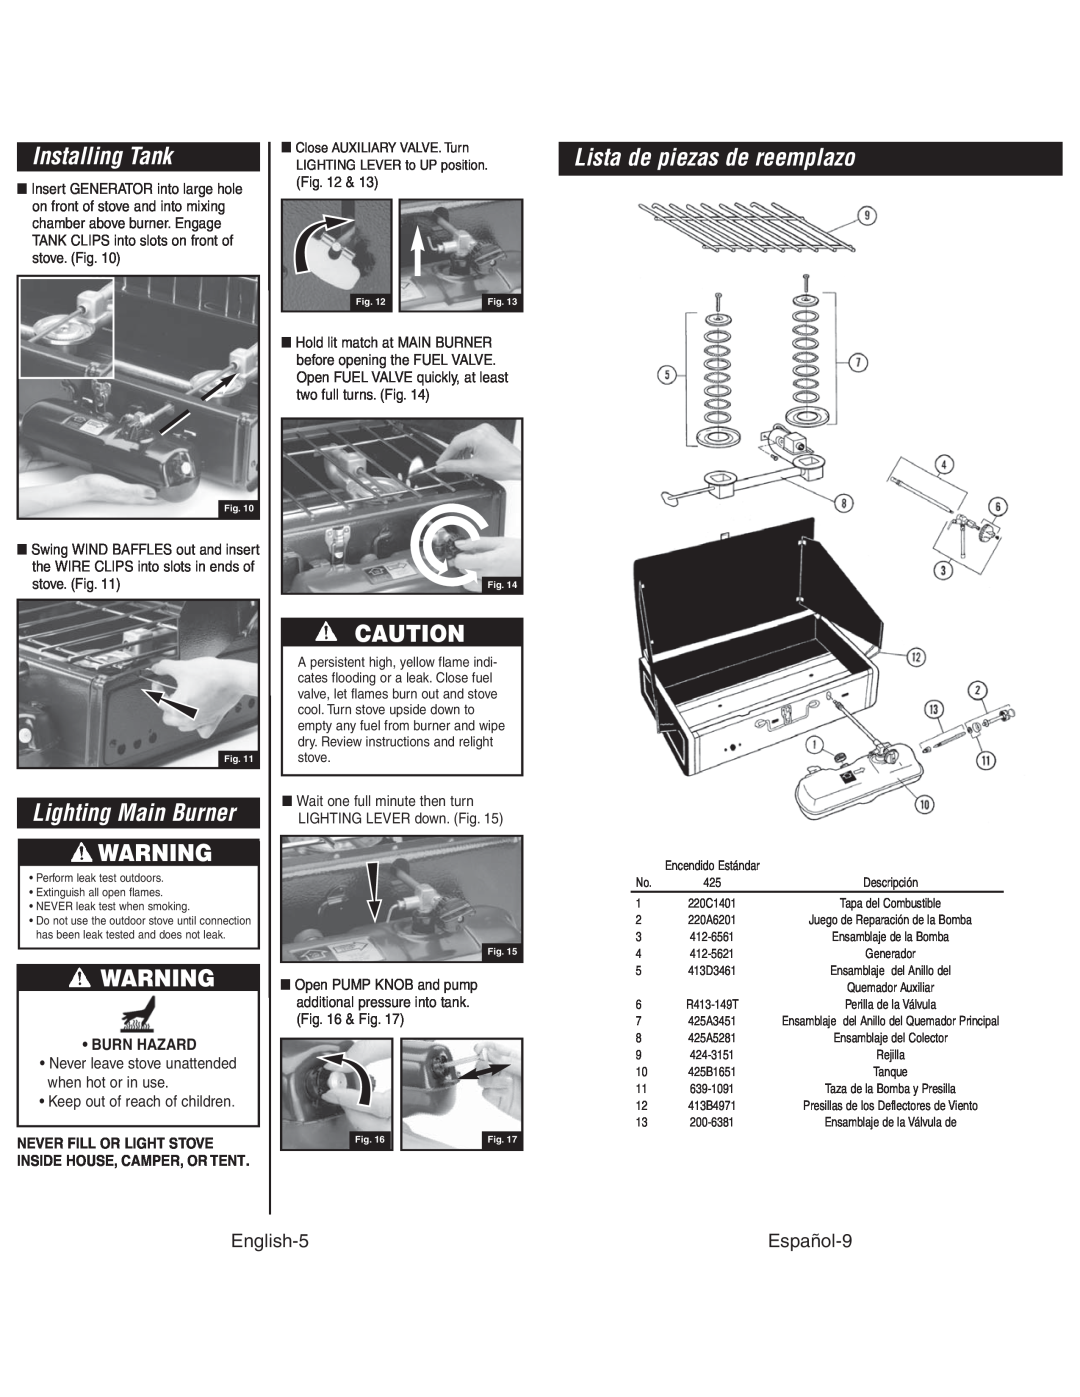 Coleman 425G instruction manual Installing Tank, Lighting Main Burner, Lista de piezas de reemplazo, English-5, Español-9 